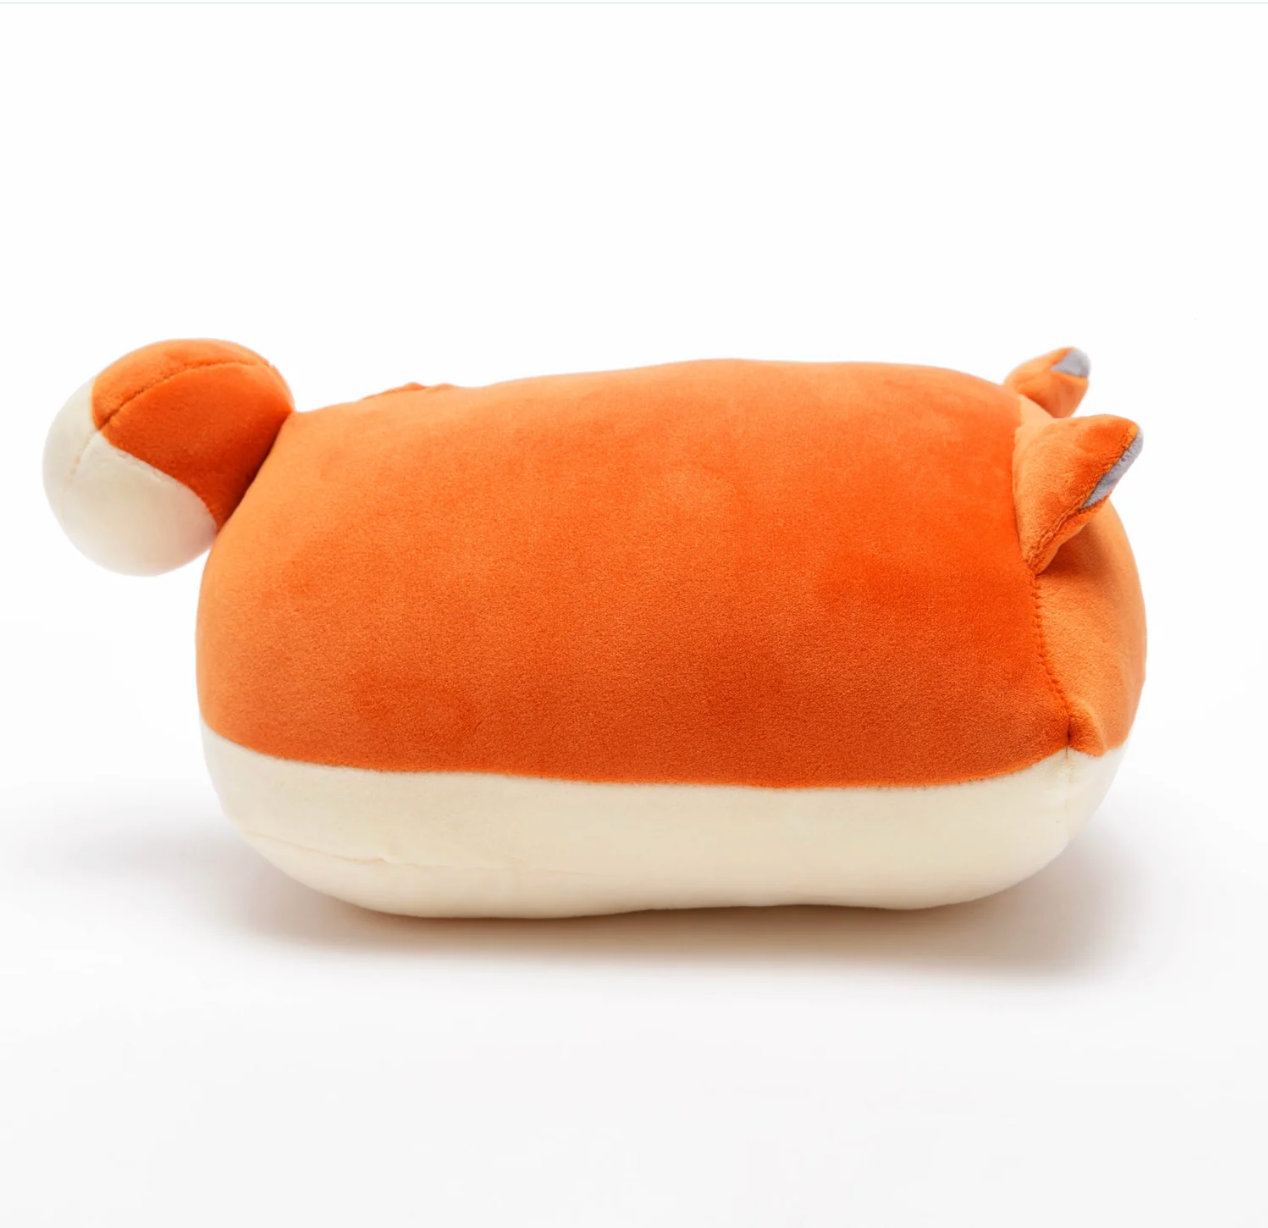 Anirollz 10" Foxiroll Ultra Soft Pillow Squishy Rest Warm Support Plush Comfort Stuffed Animal